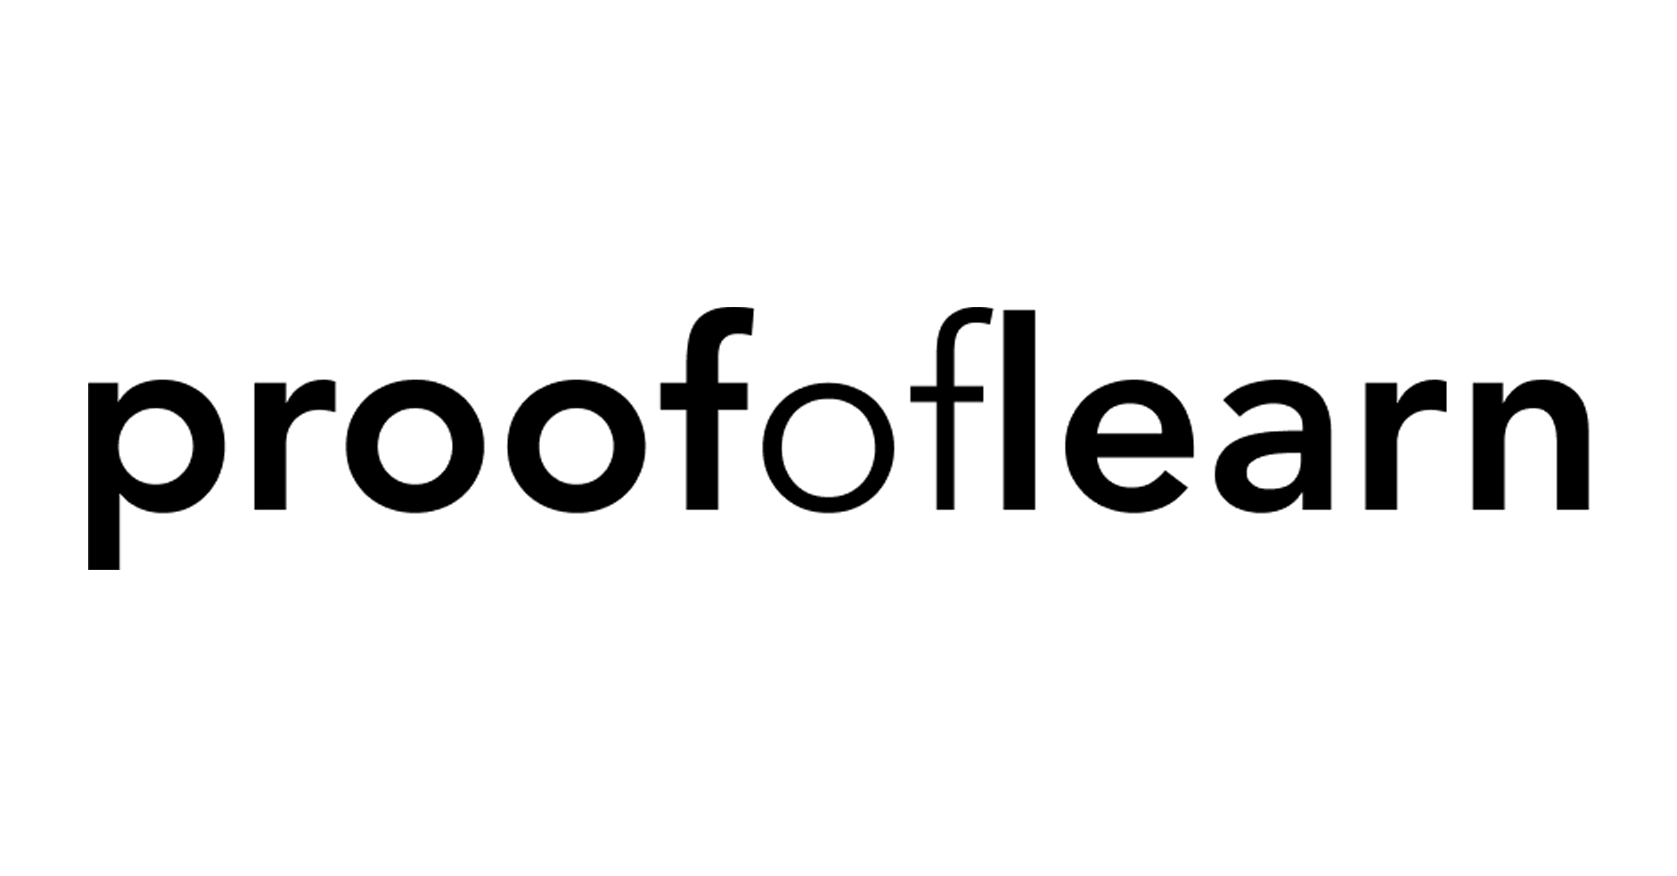 ProofofLearn-Logo